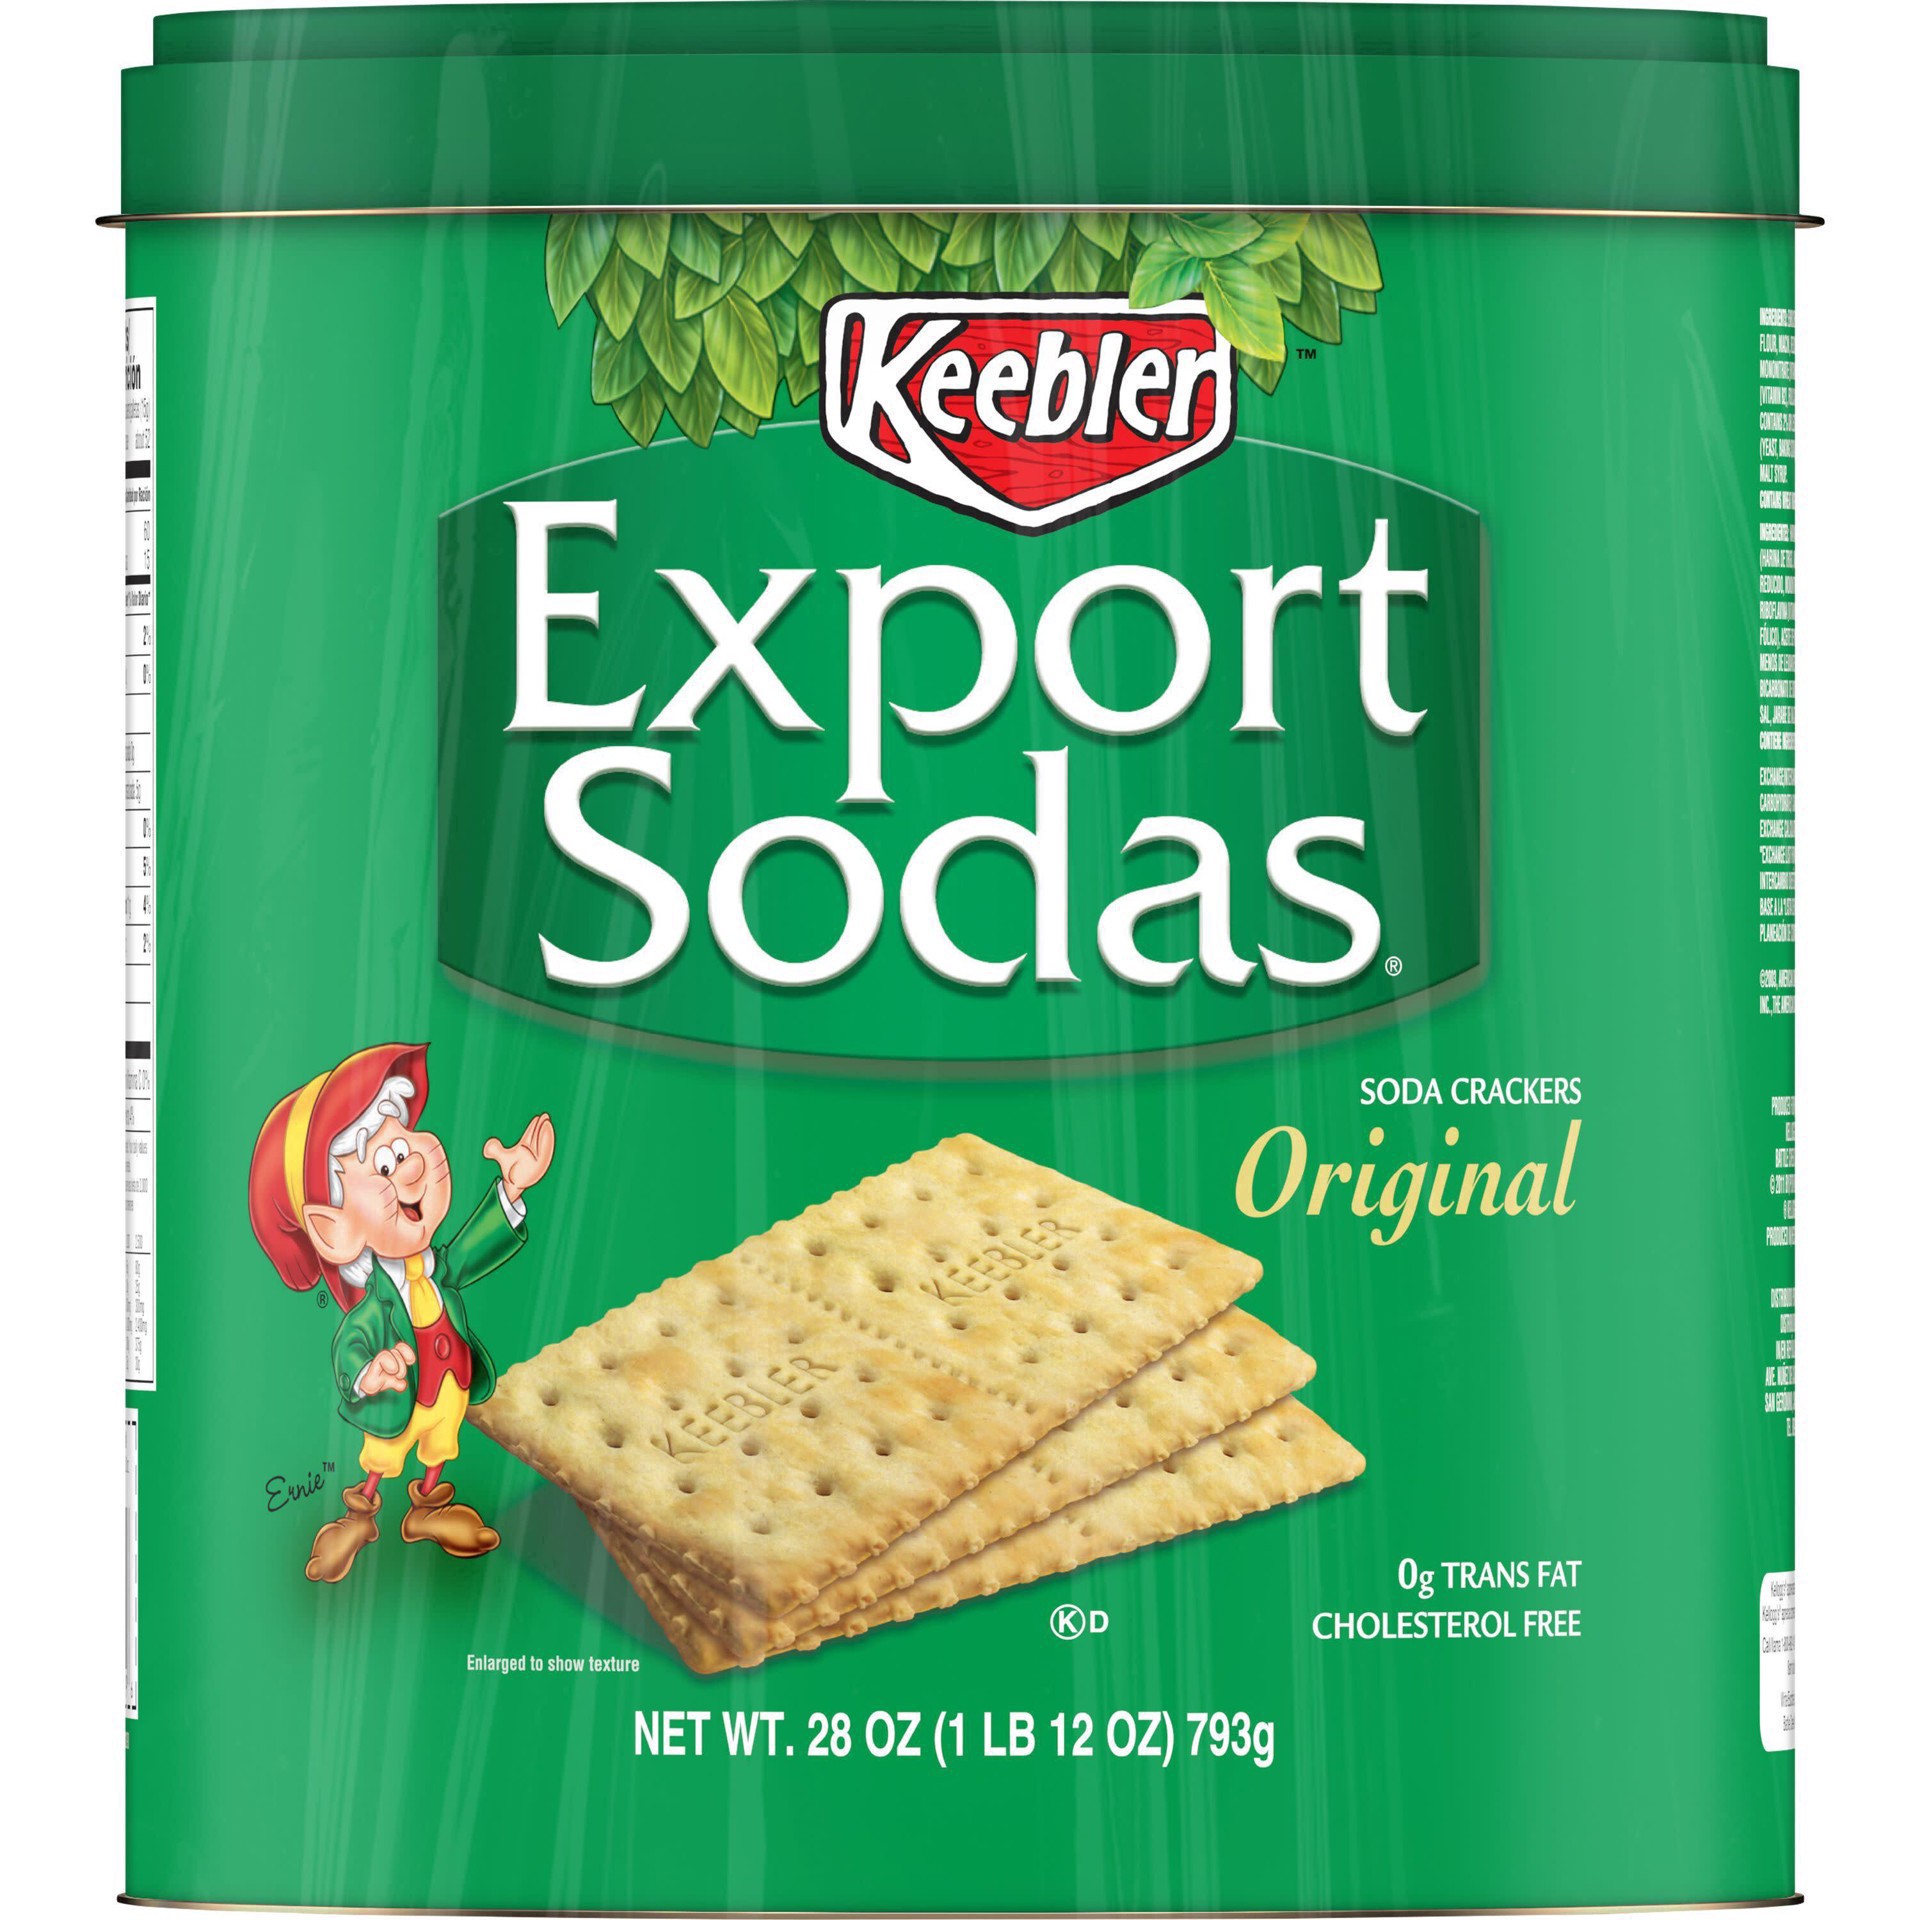 slide 40 of 63, Keebler Export Sodas Soda Crackers, Original, 28 oz, 28 oz